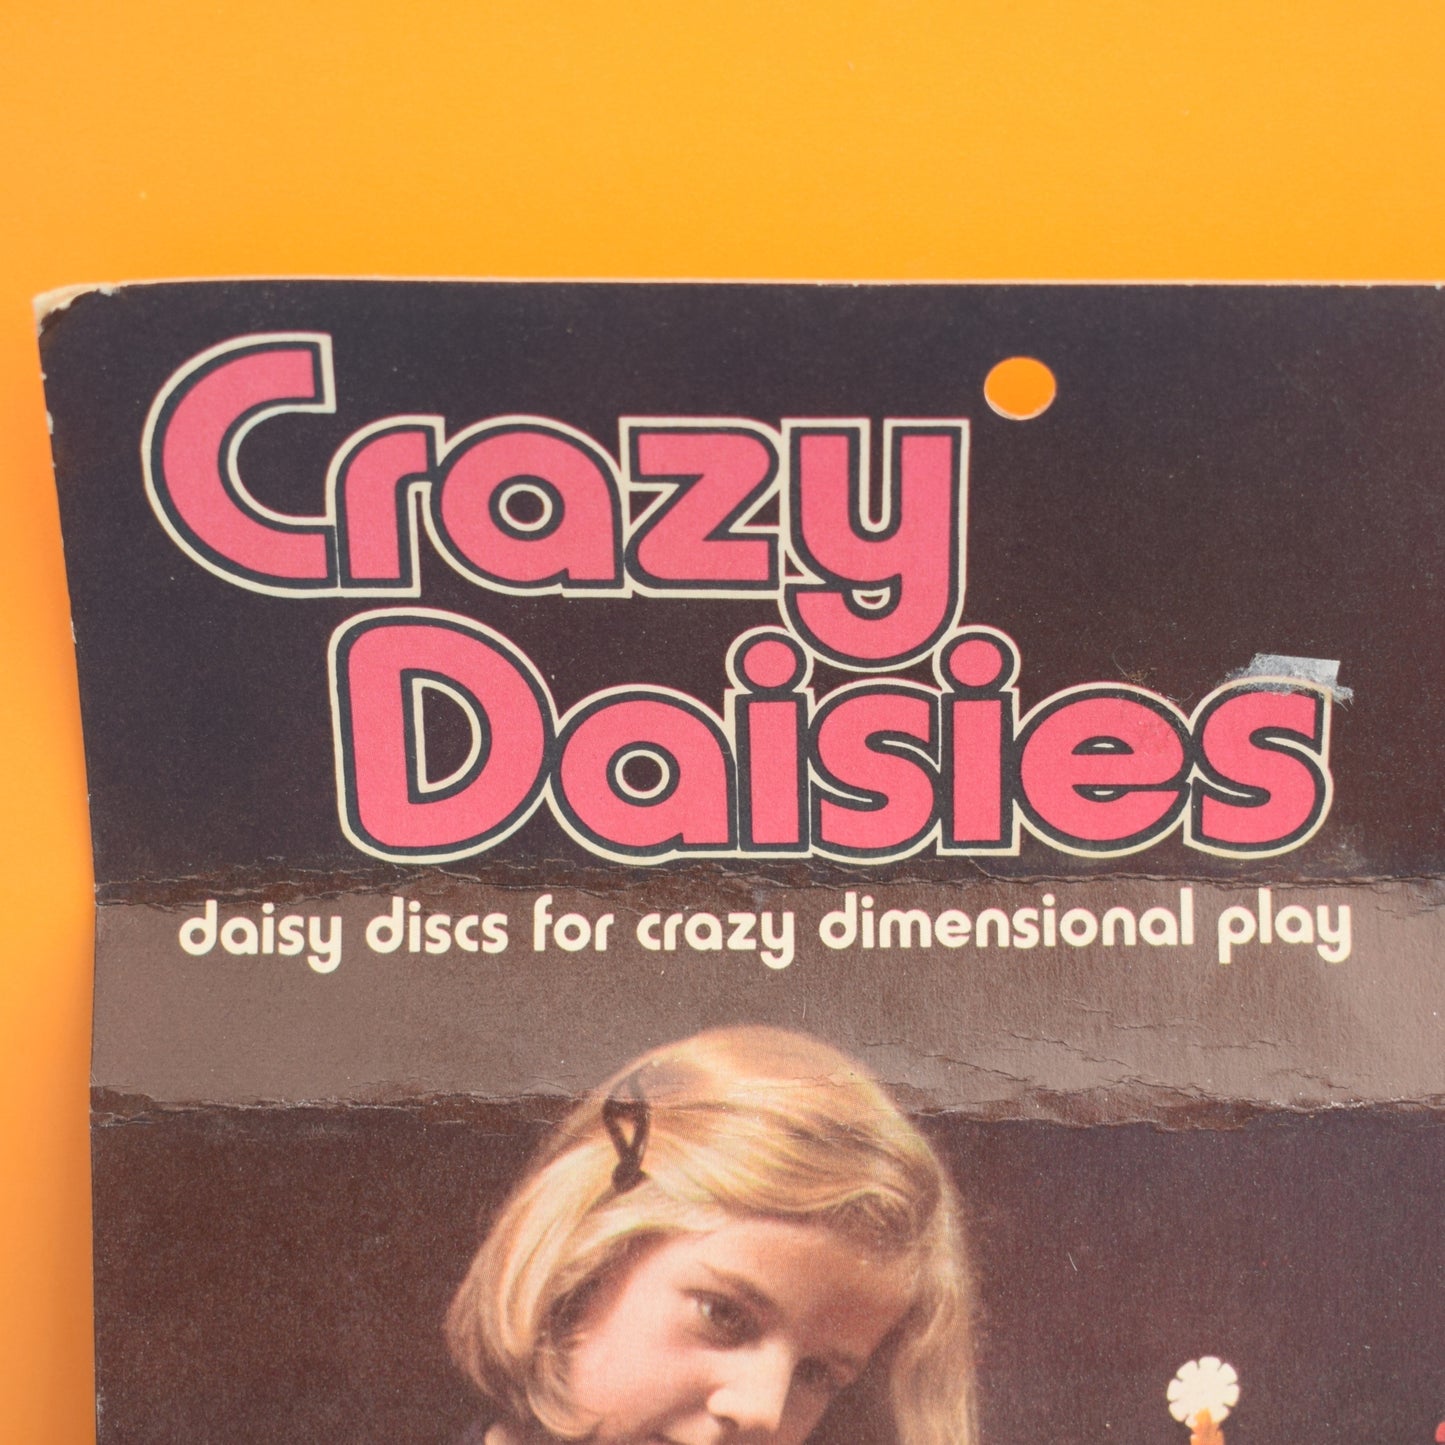 Vintage 1960s Crazy Daisies - Boxed -Victoy